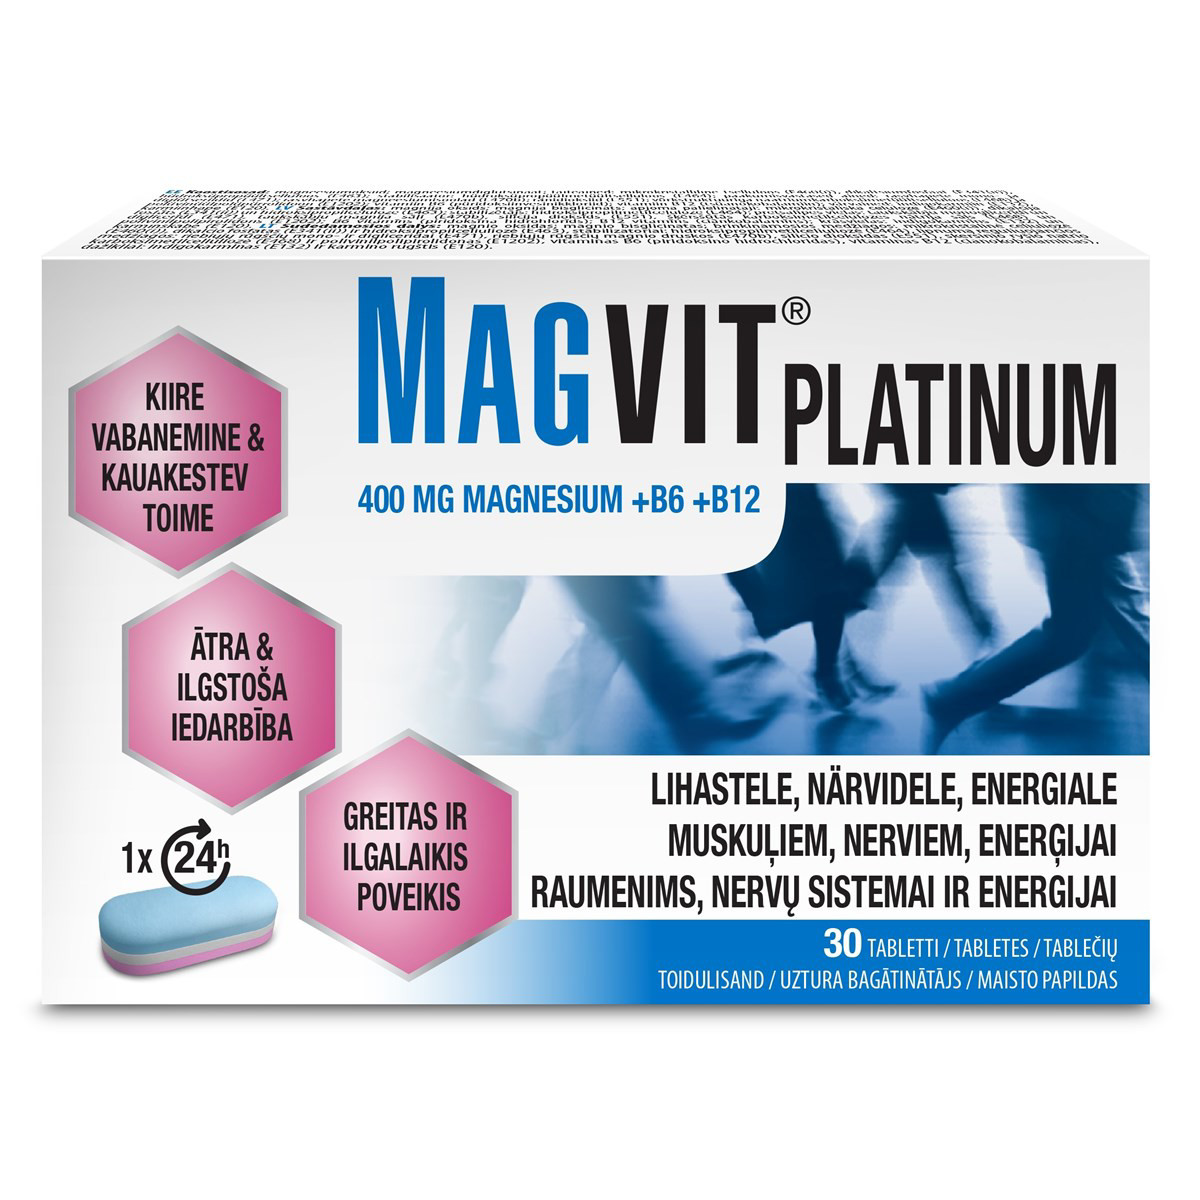 MAGVIT PLATINUM, 400 mg MAGNESIUM + B6 + B12, 30 tablečių